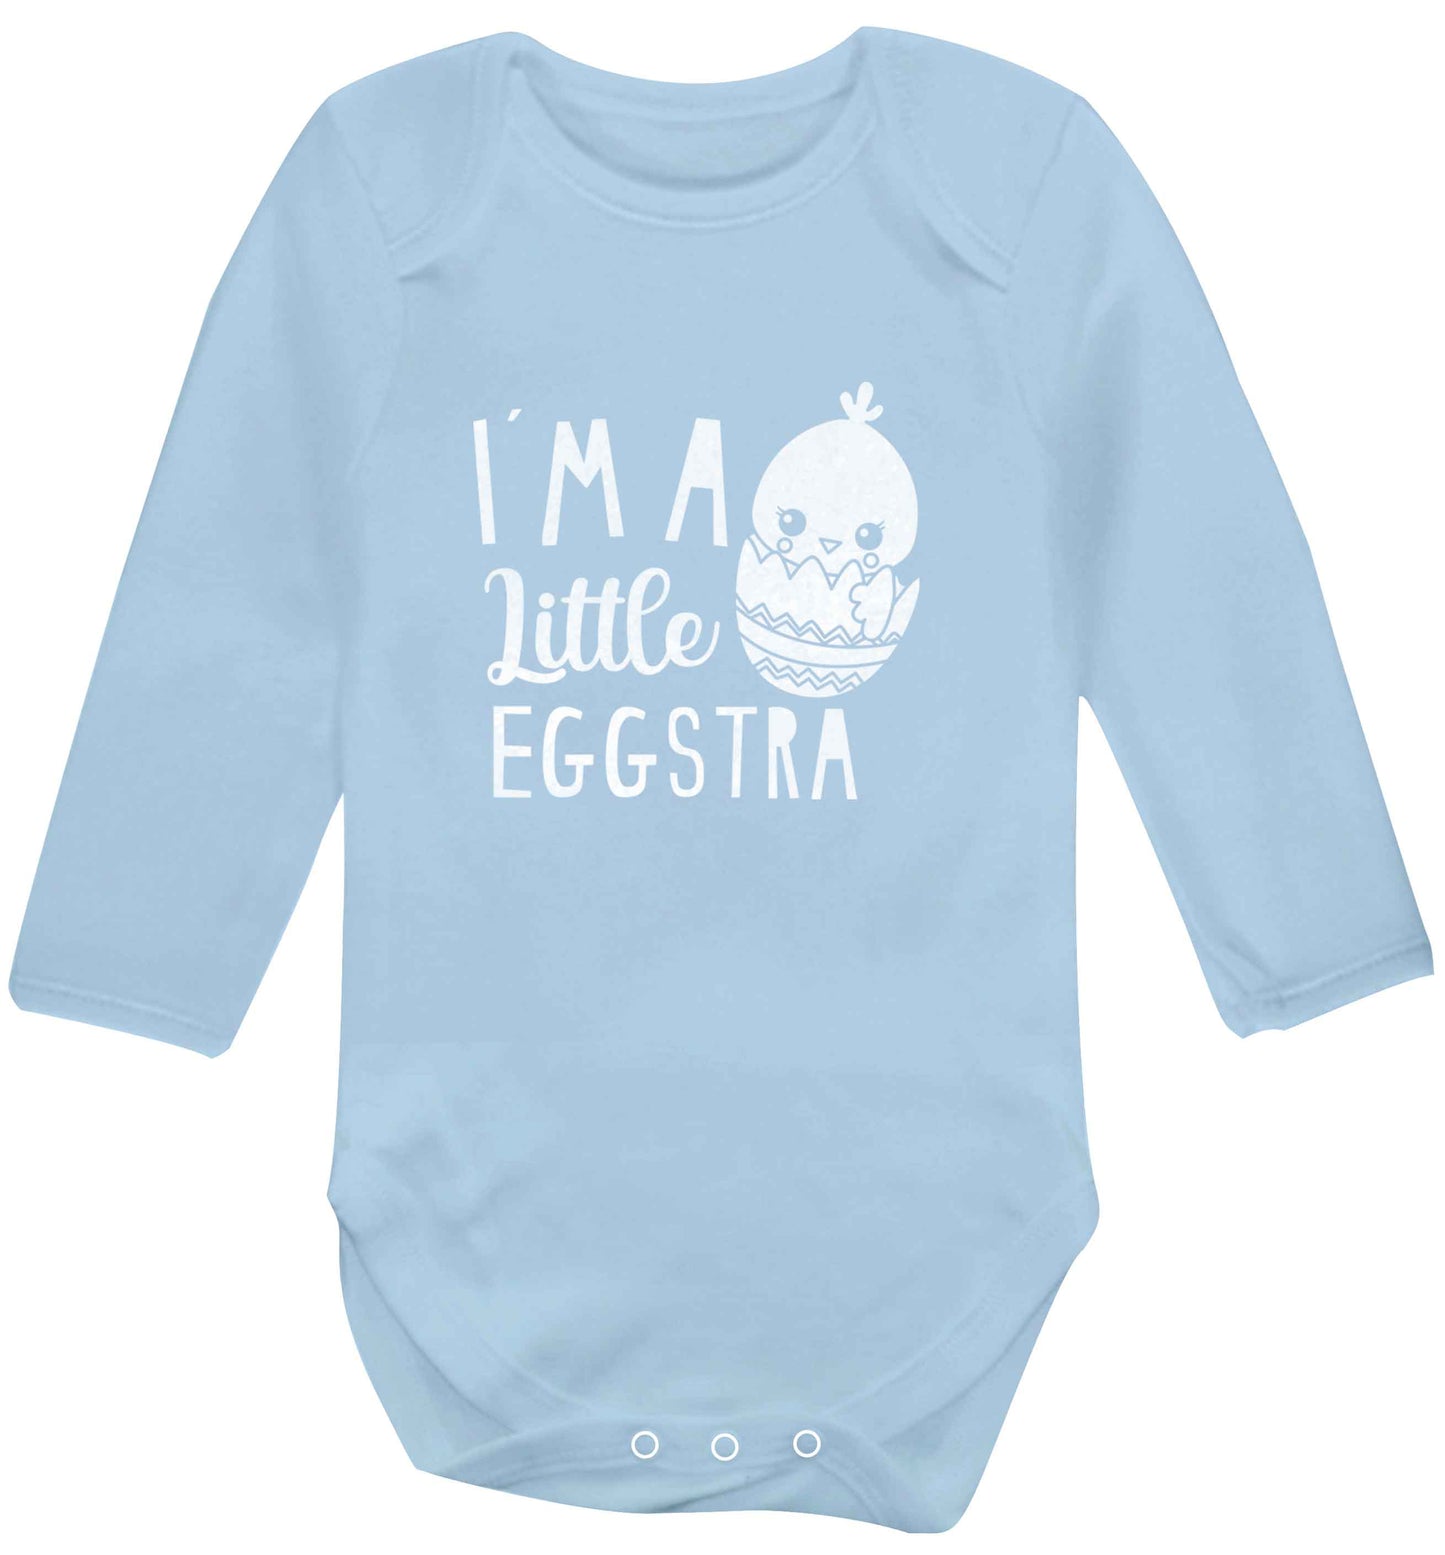 I'm a little eggstra baby vest long sleeved pale blue 6-12 months